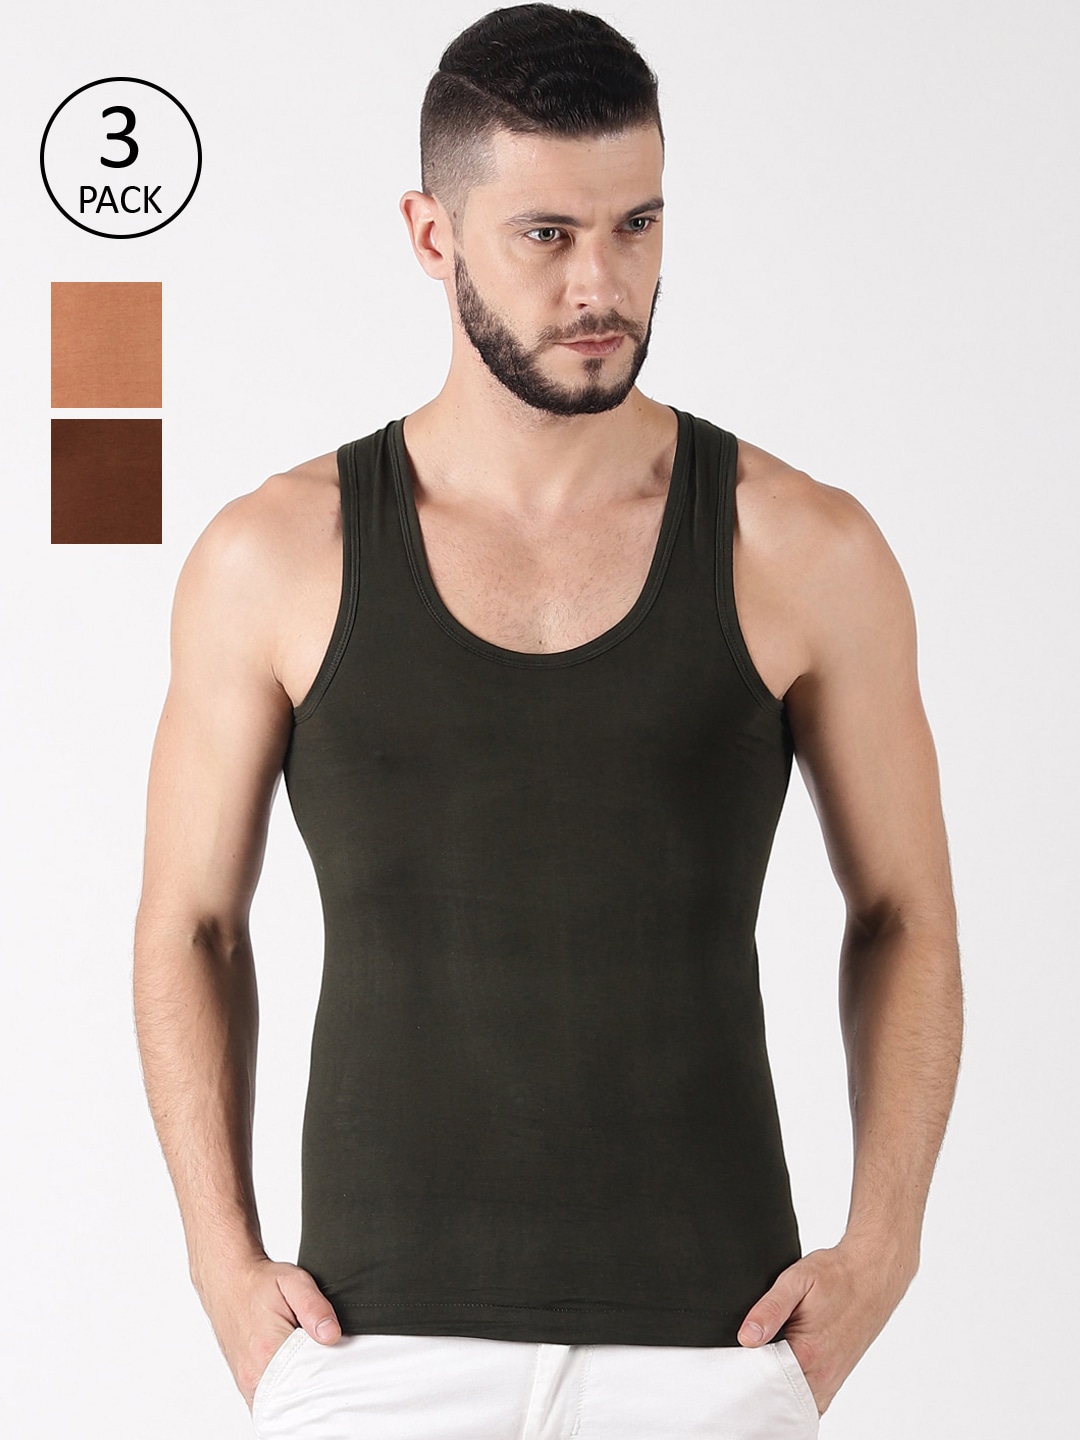 Clothing Innerwear Vests | Dollar Lehar Men Pack Of 3 Assorted Innerwear Vests MLHVE-01-PO3-ASST2 - AB35820